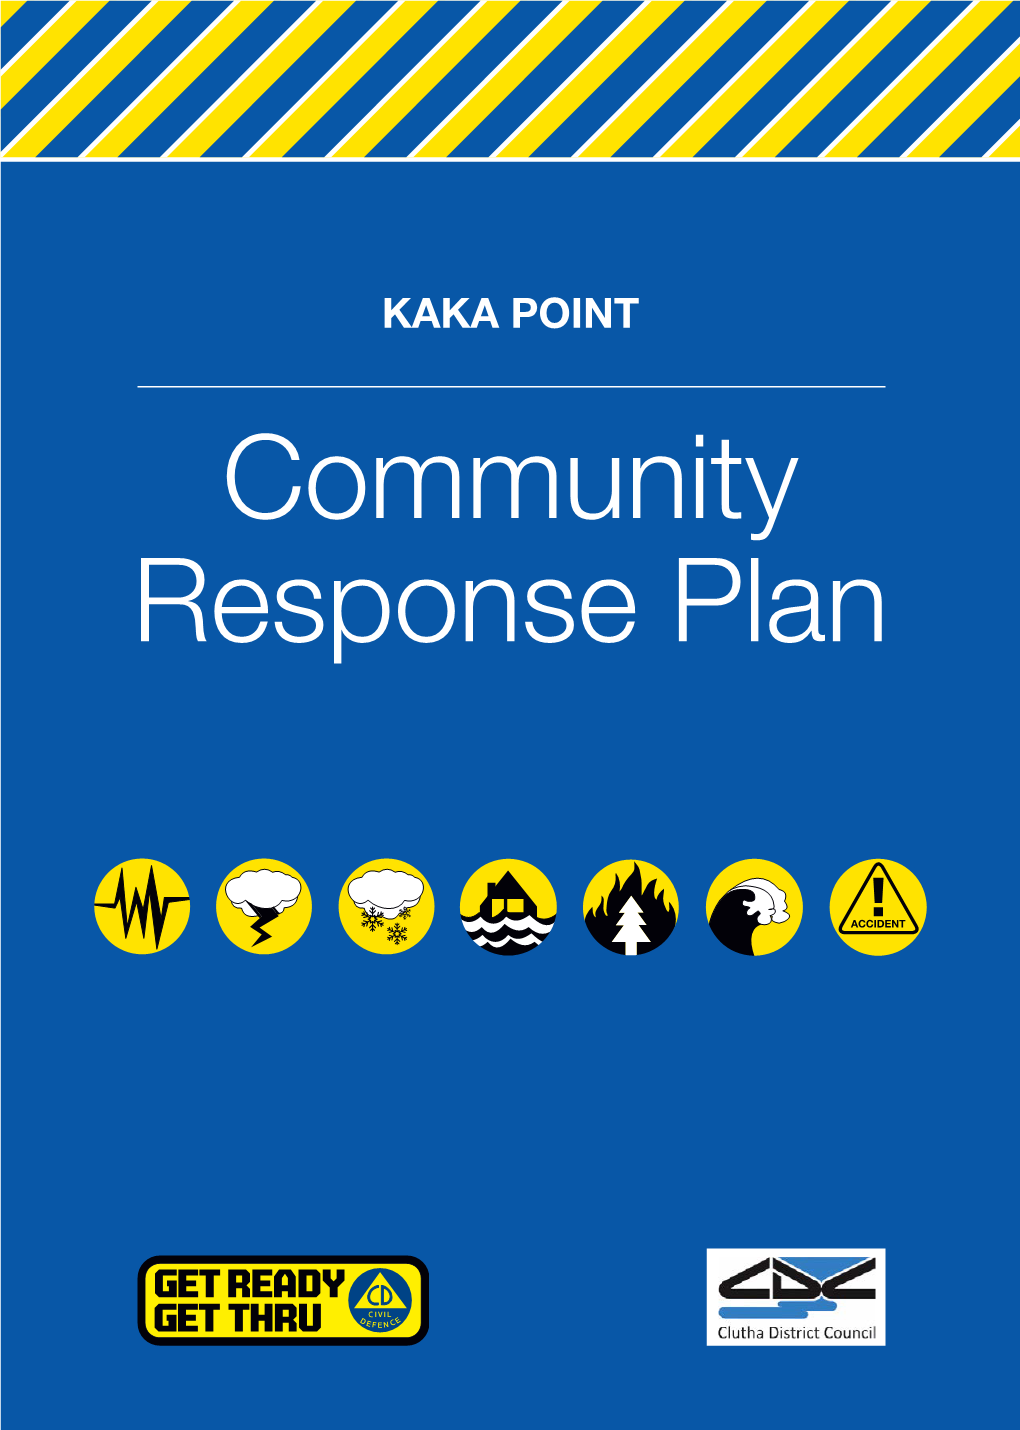 KAKA POINT Community Response Plan Contents